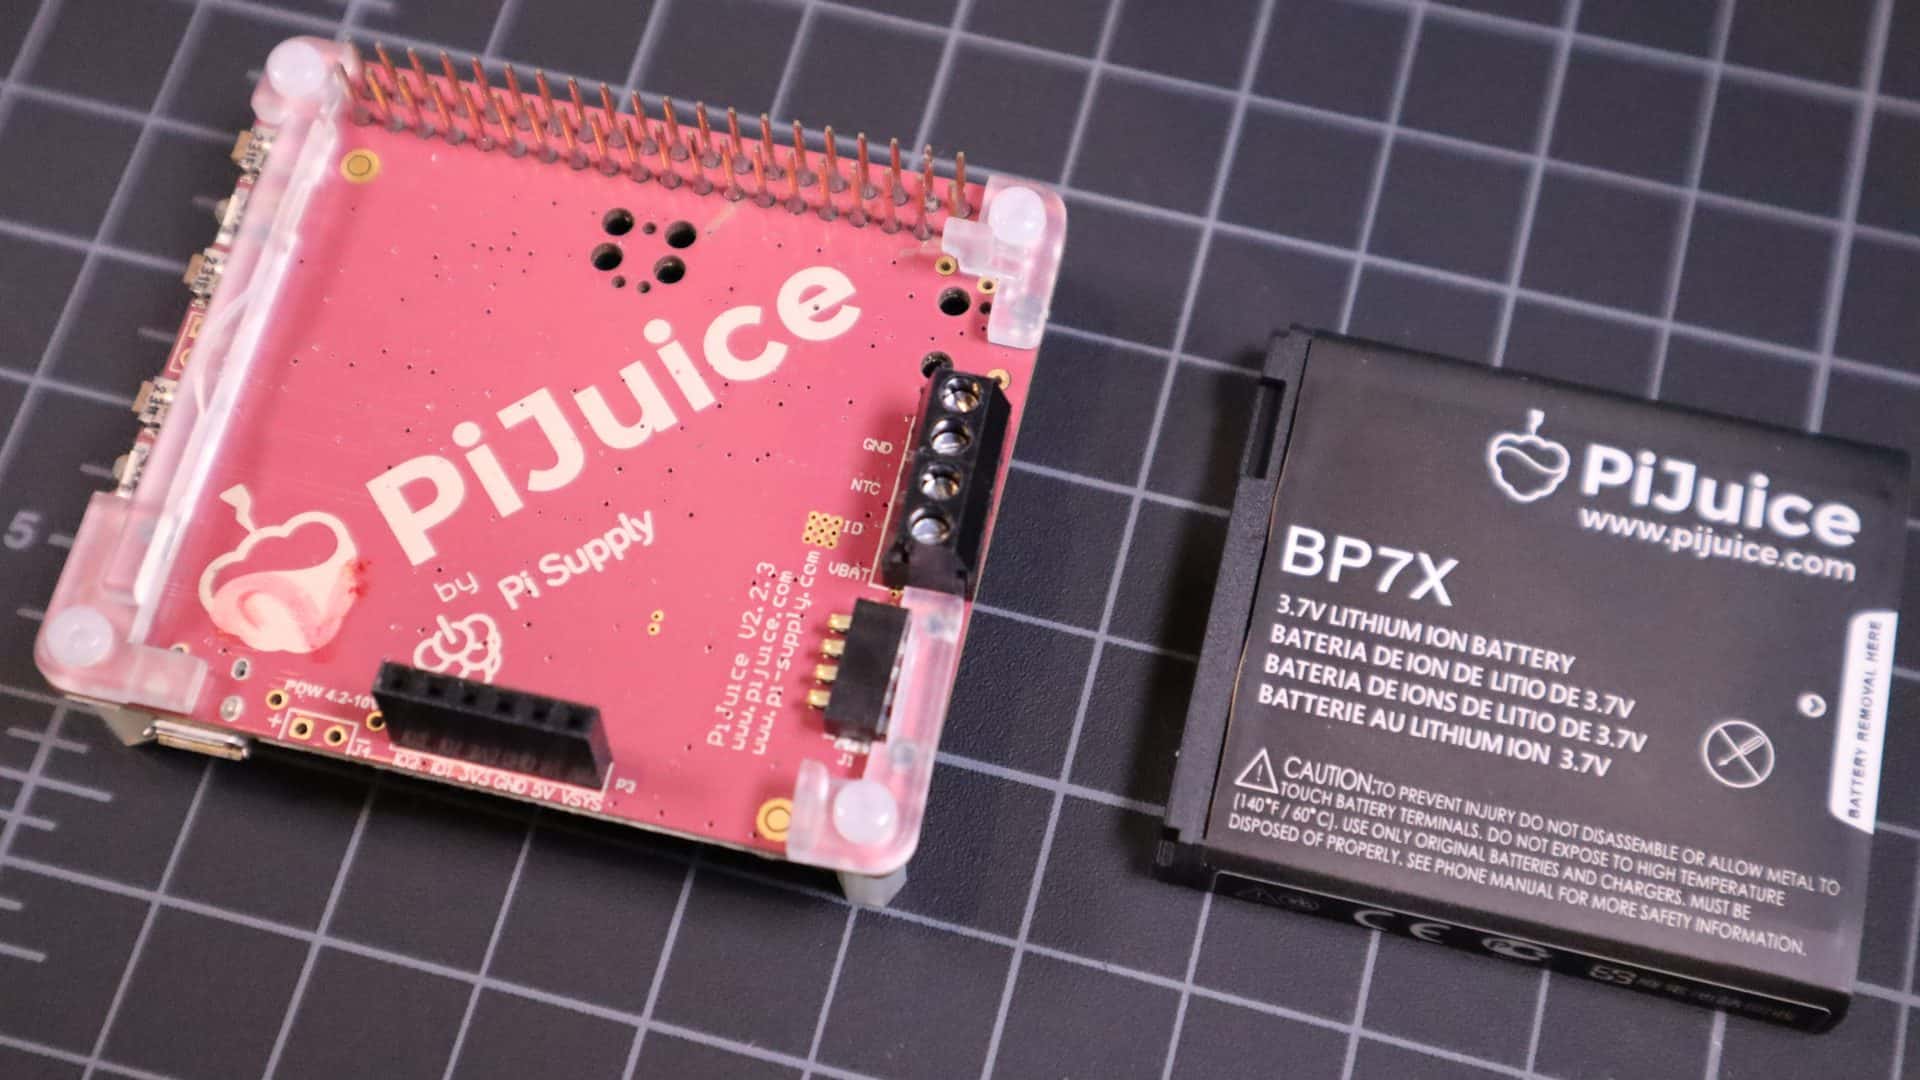 PiJuice Raspberry Pi Battery Pack